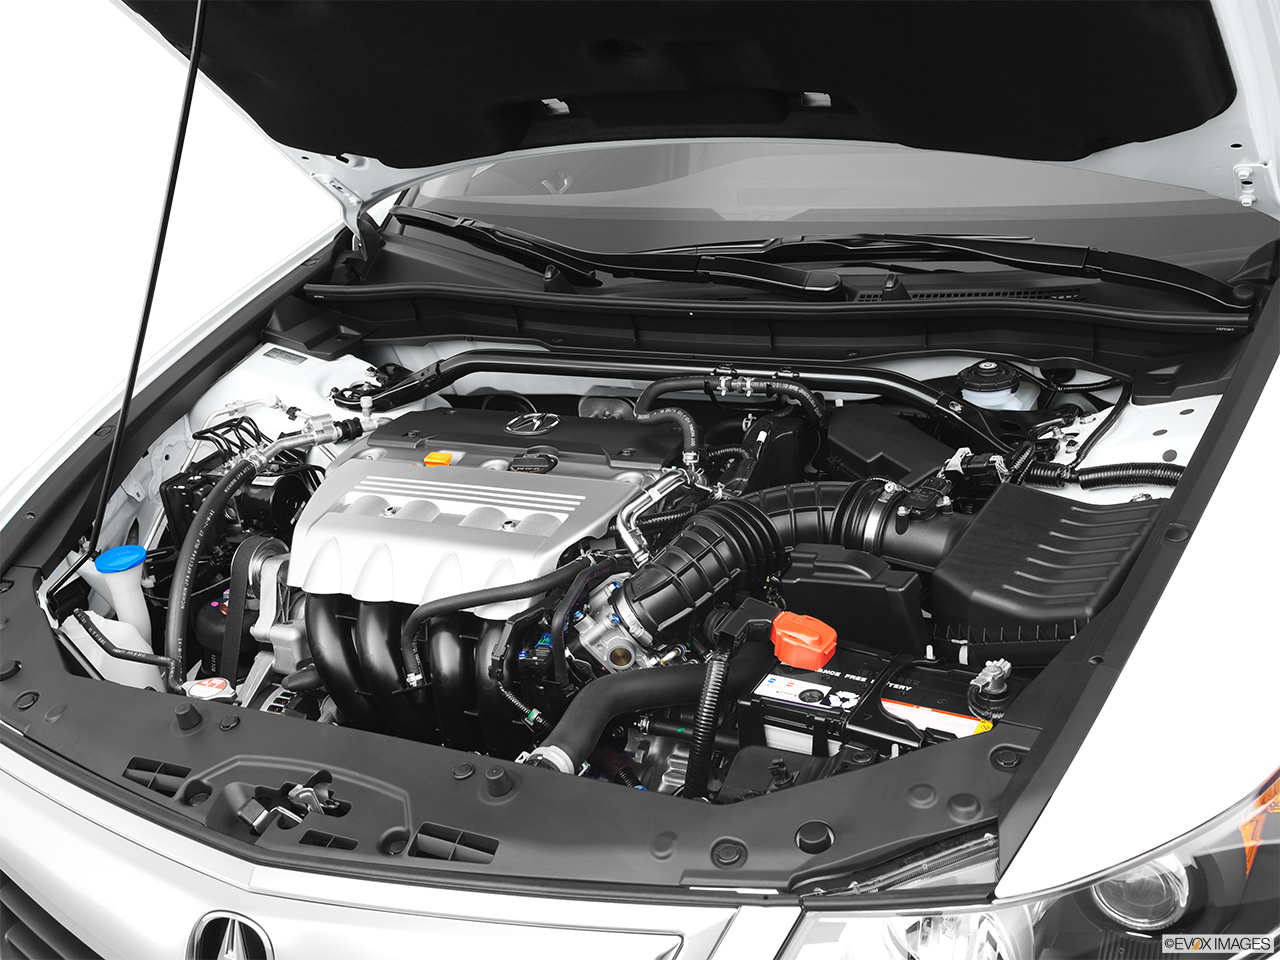 2011 Acura TSX TSX 5-speed Automatic Engine. 